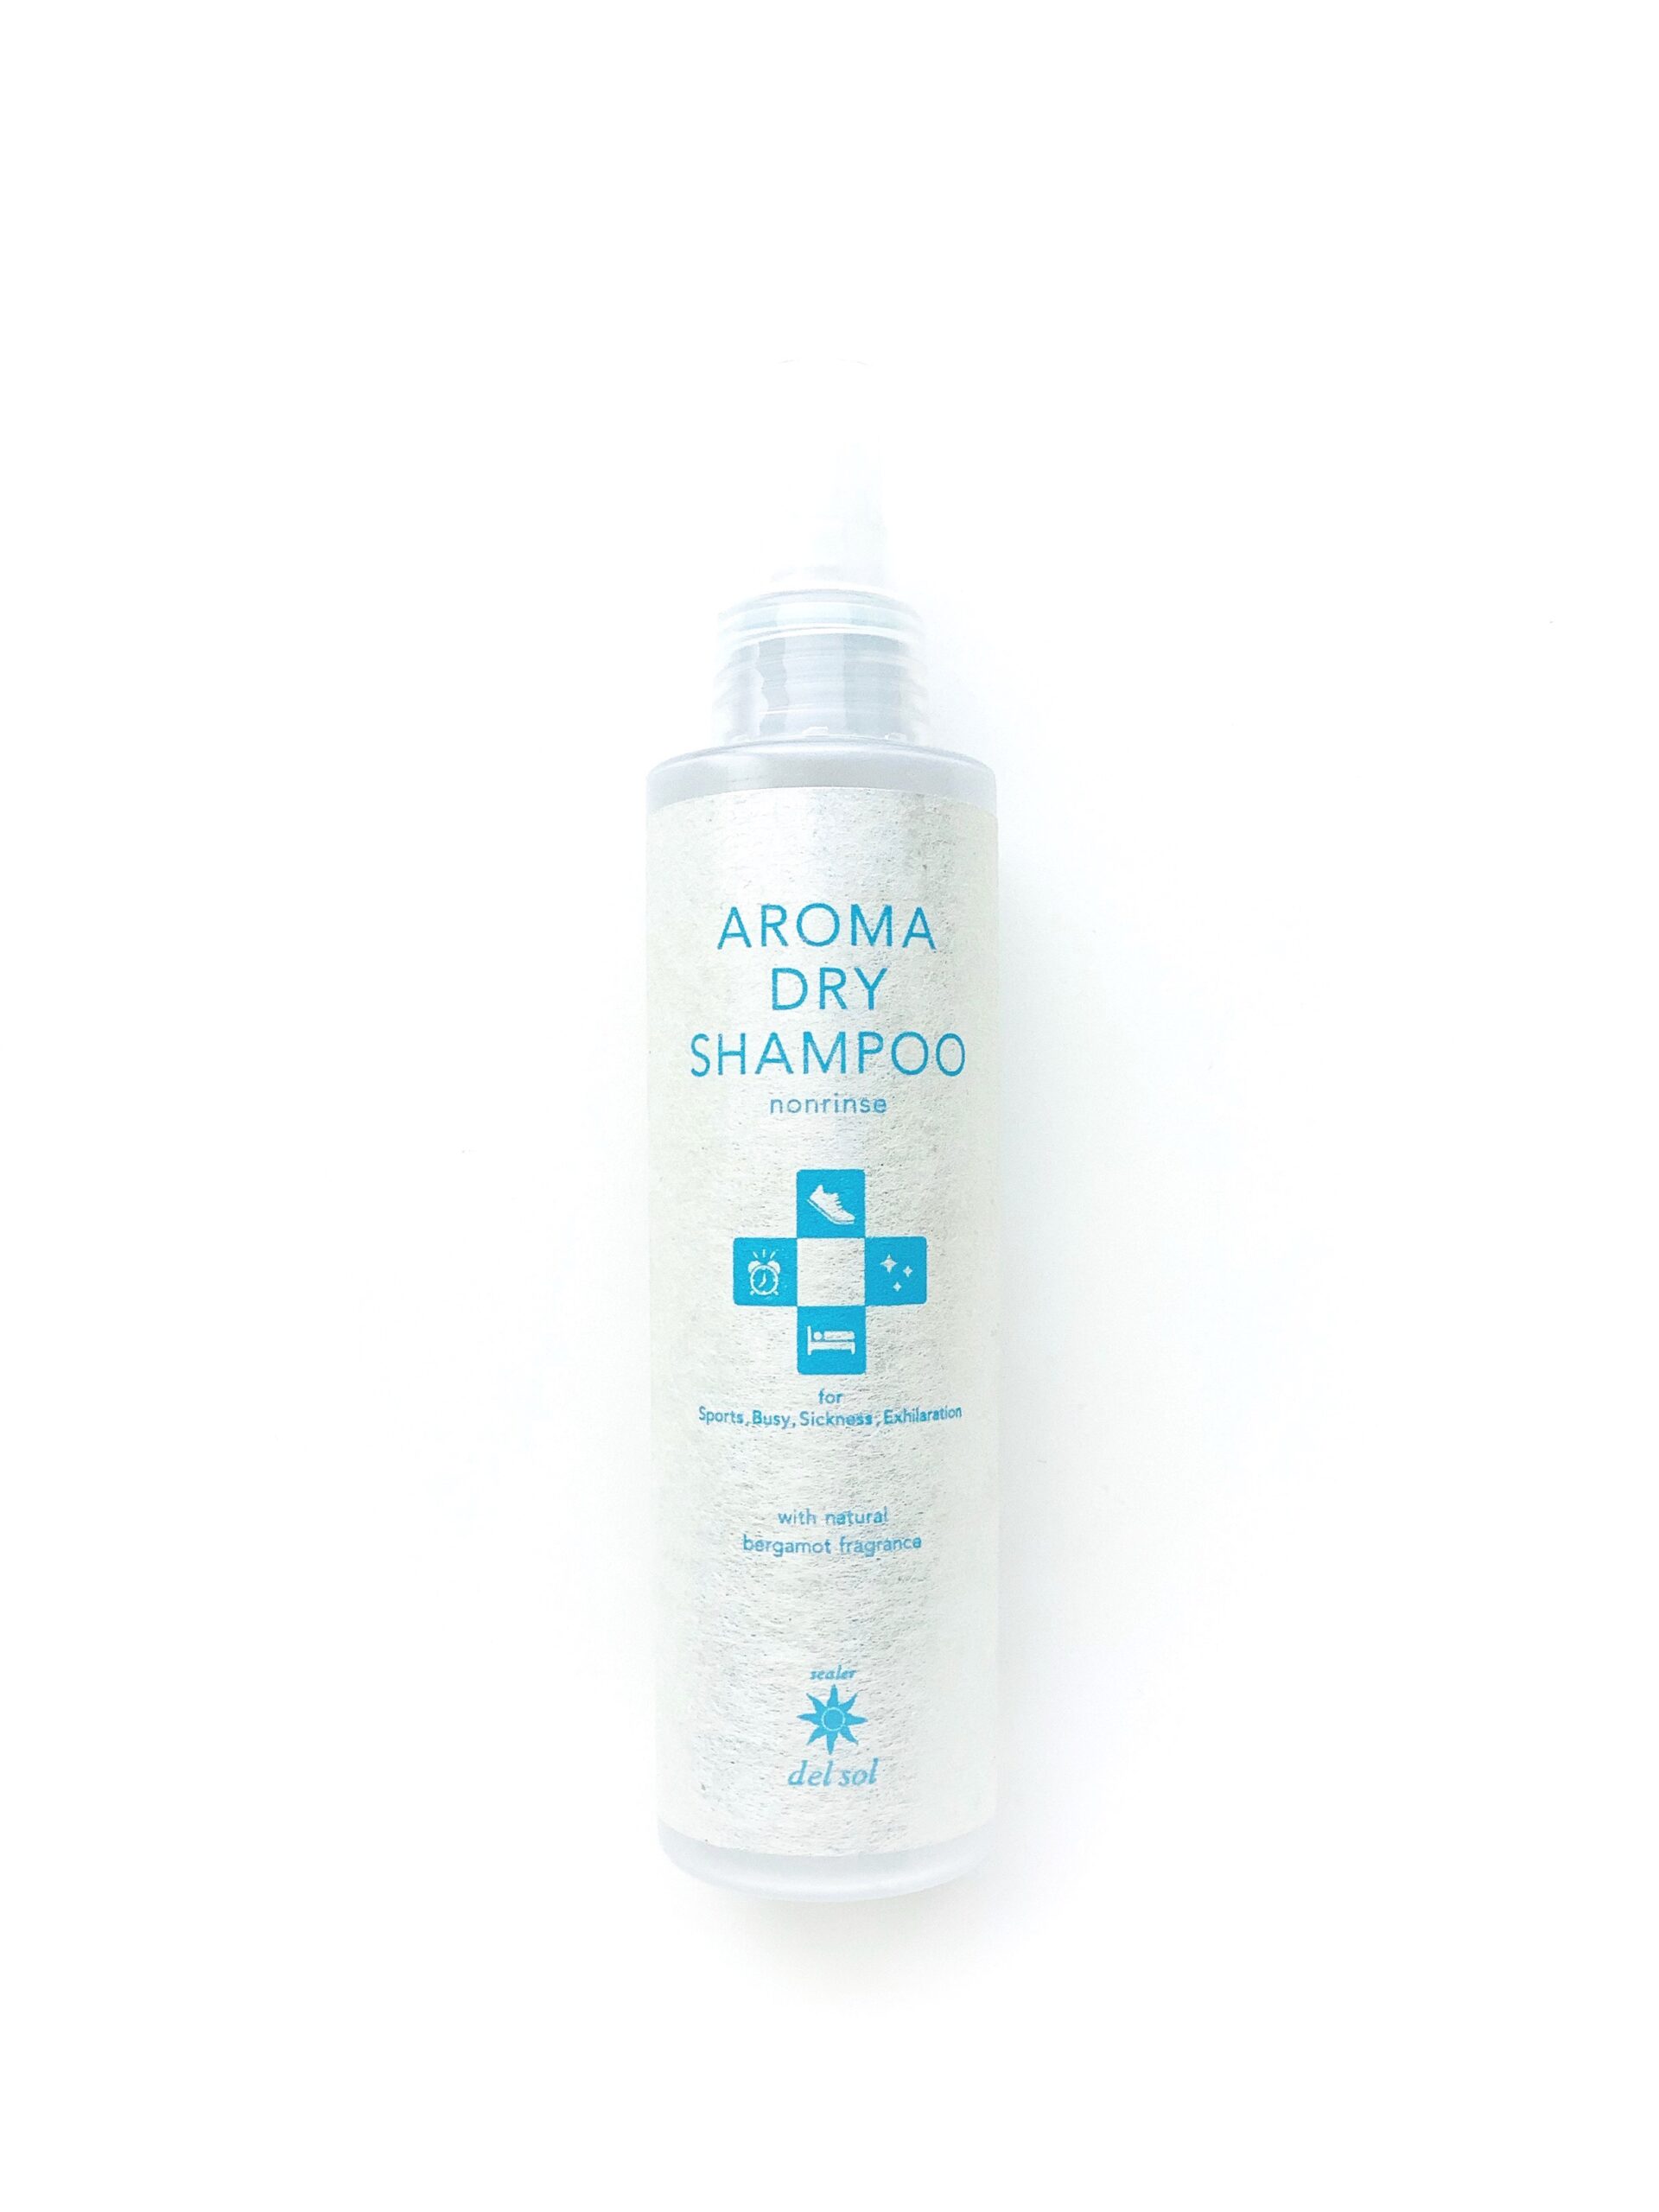 【sealerdelsol】Aroma Dry Shampoo 150ml